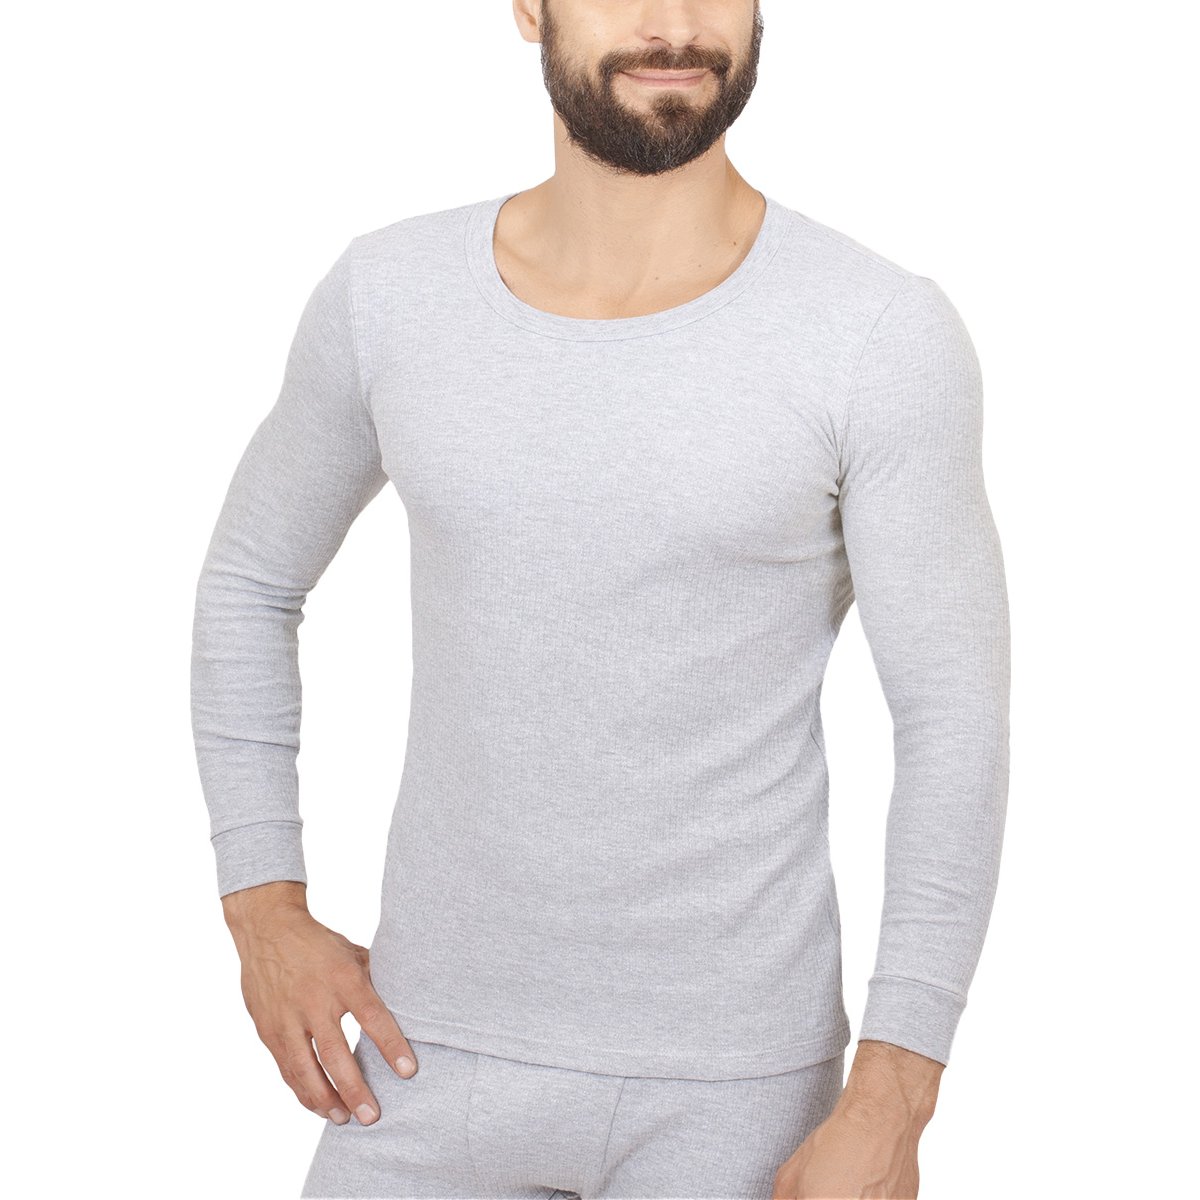 ATRNA Ropa Termica, Camiseta Termica Pantalones Termicos Calcetines  Termicos Conjunto Termico-Man G